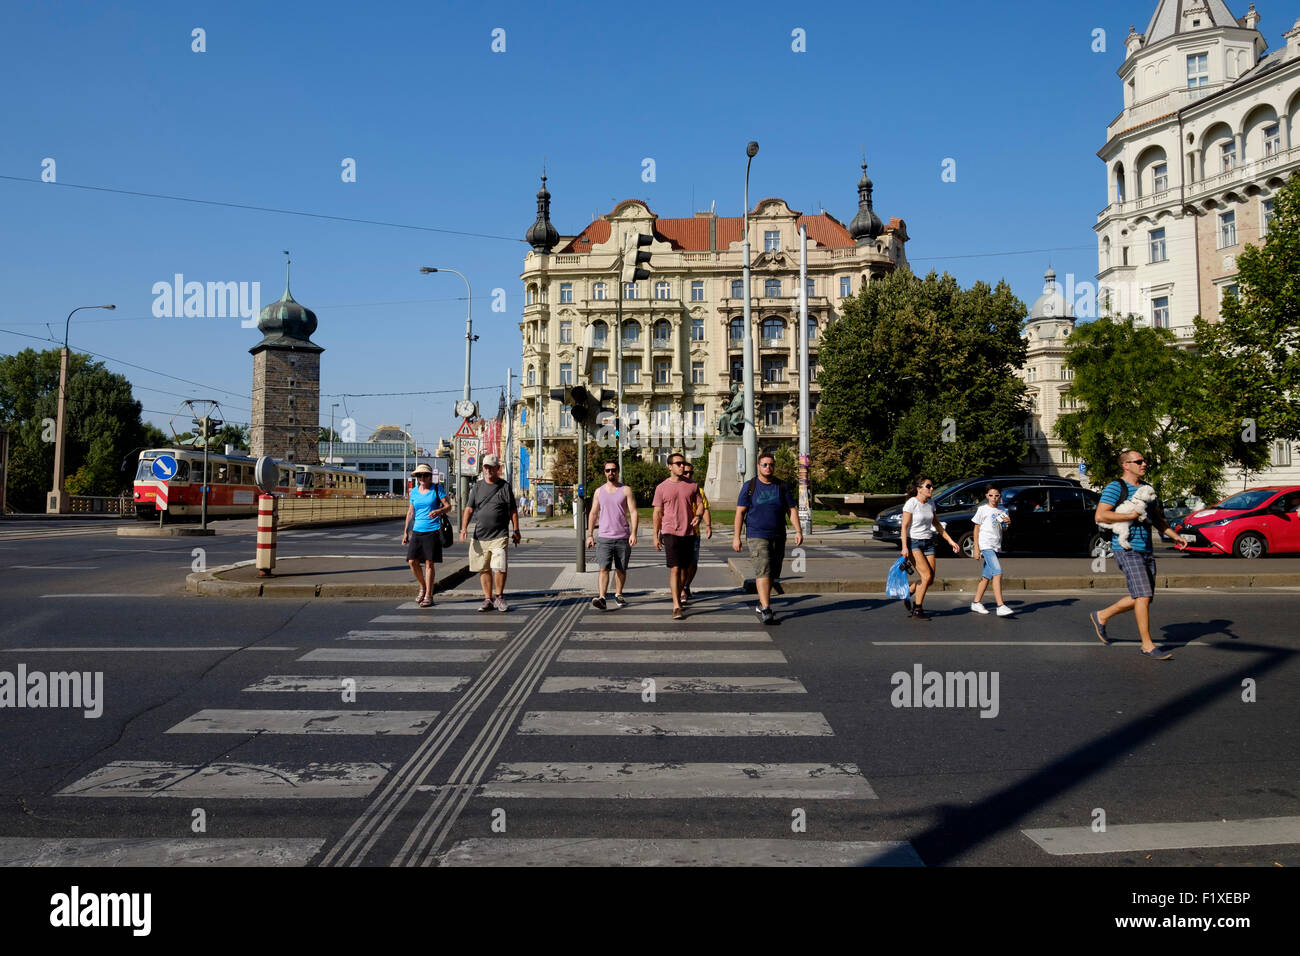 People crossing the street at a crosswalk in Prague, Czech Republic, Europe Stock Photo